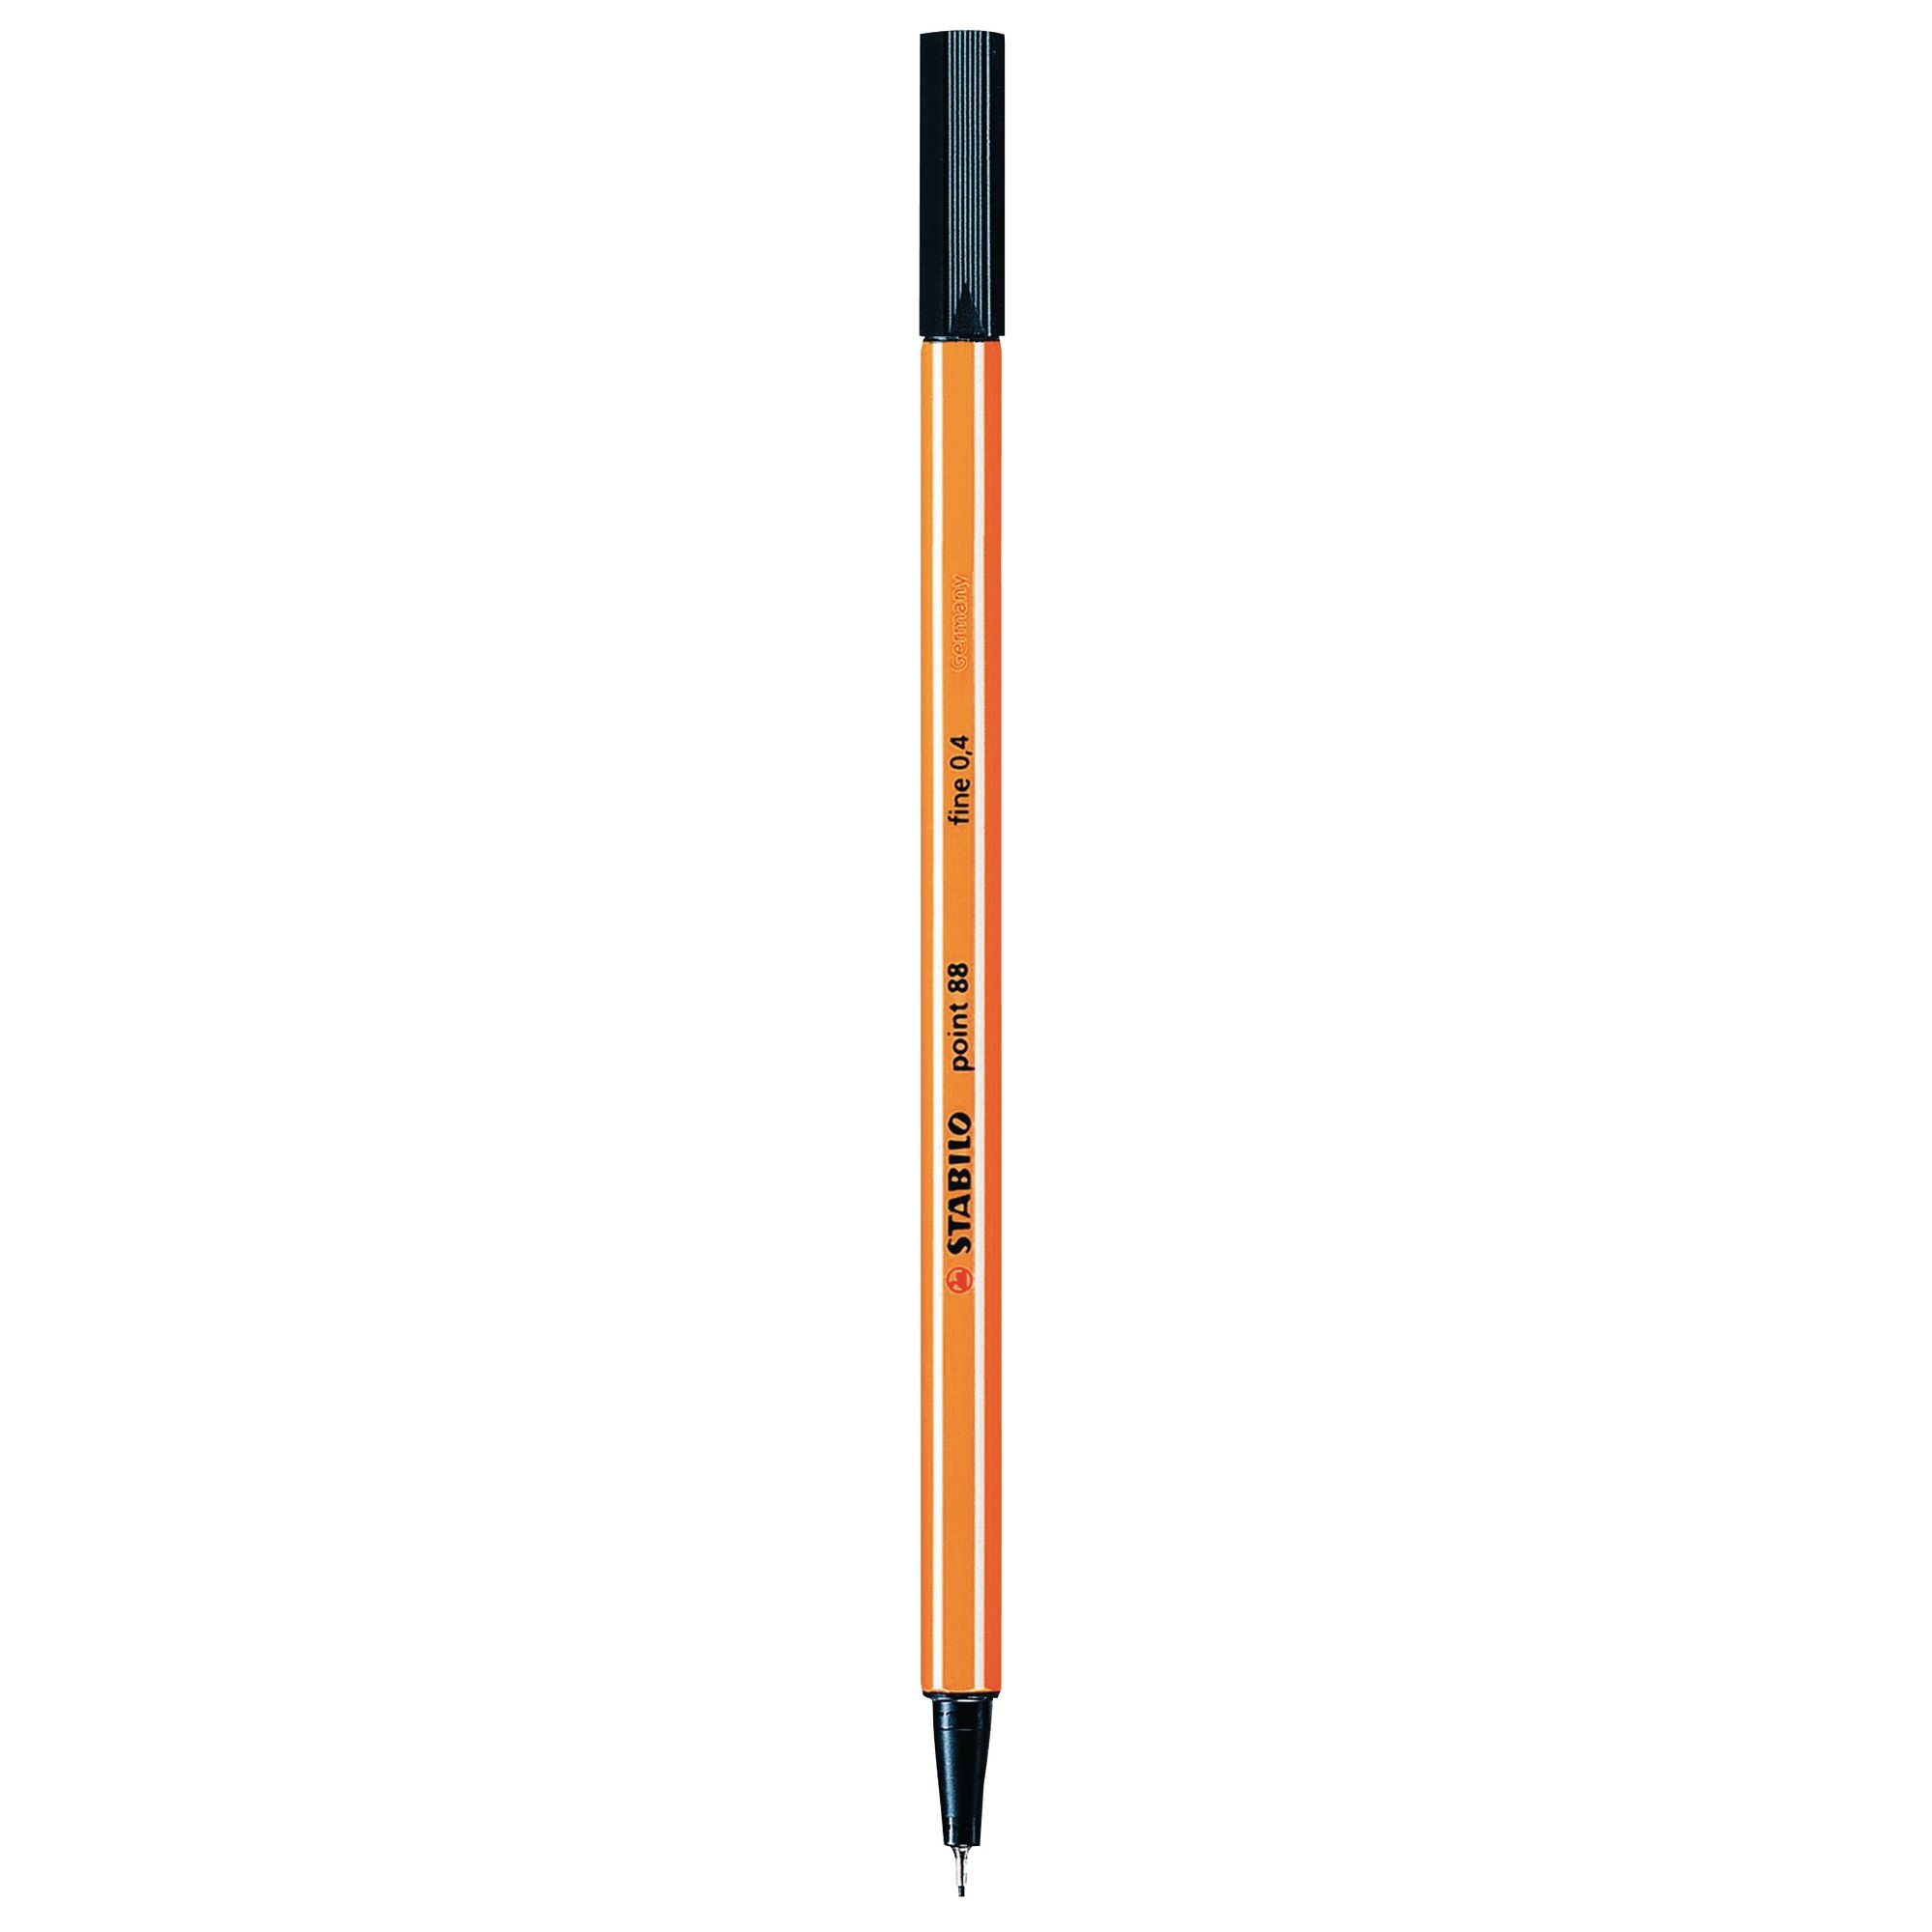 Stabilo Point 88 Fineliner Pen Black - Pack of 10